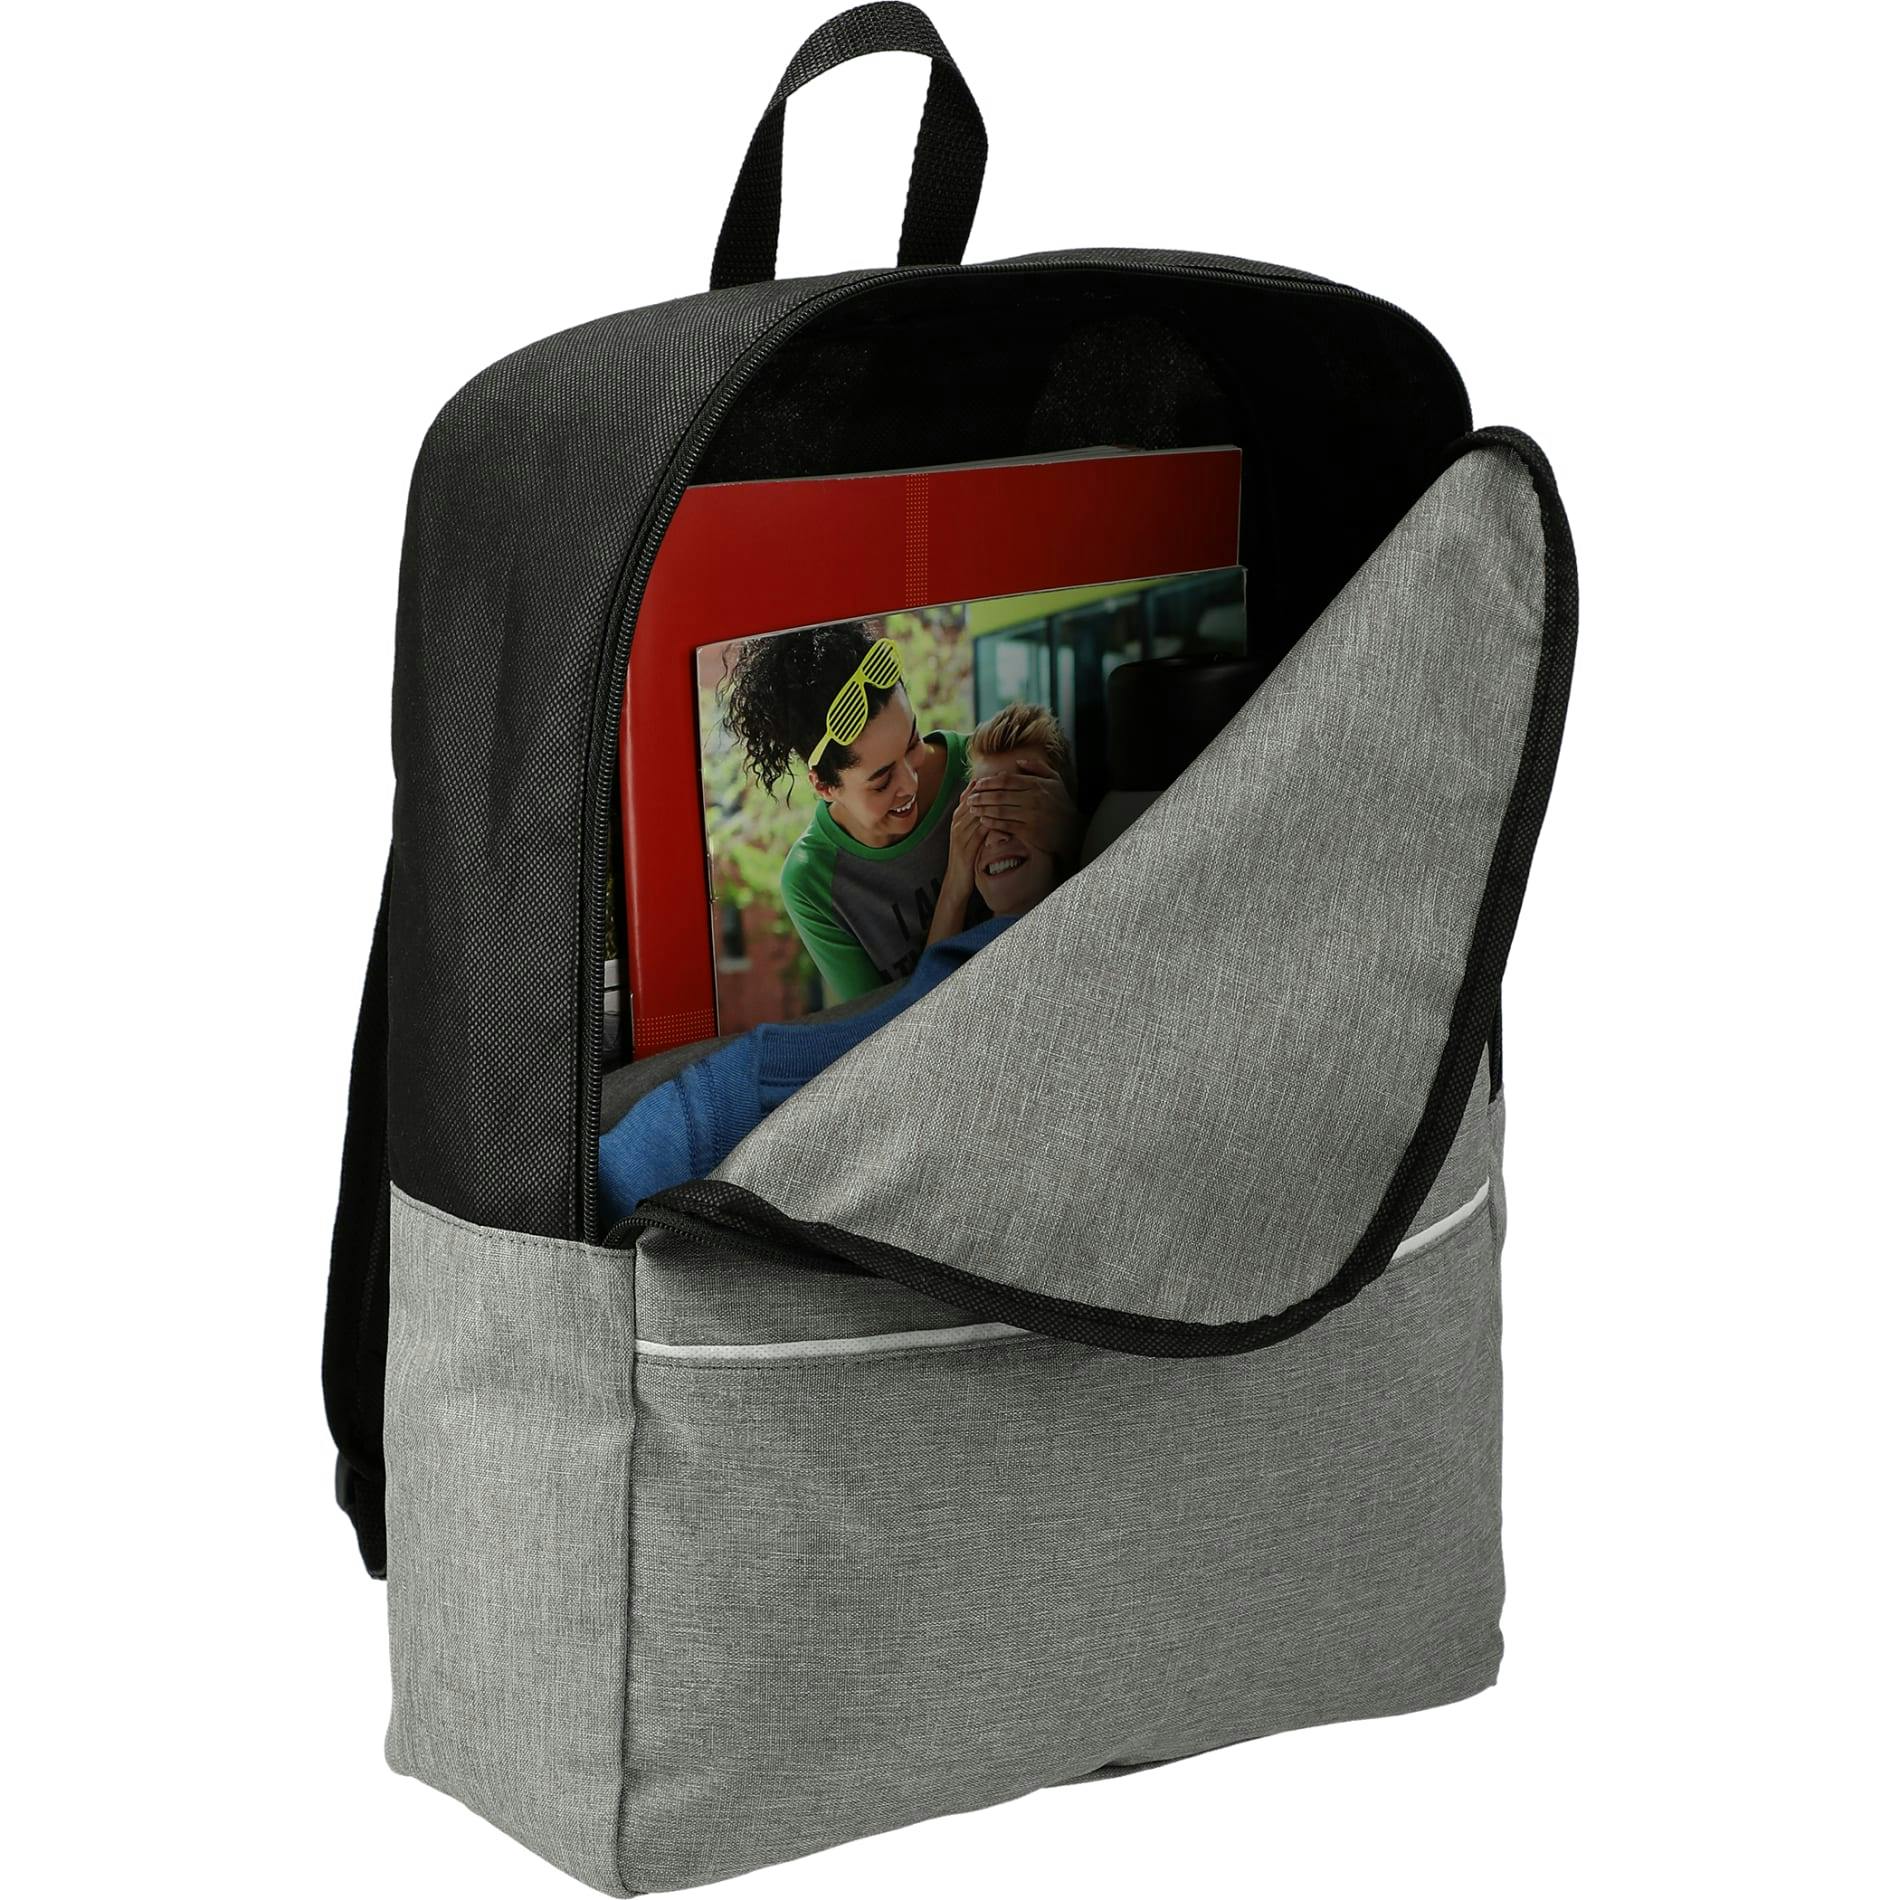 Stone Backpack - additional Image 3